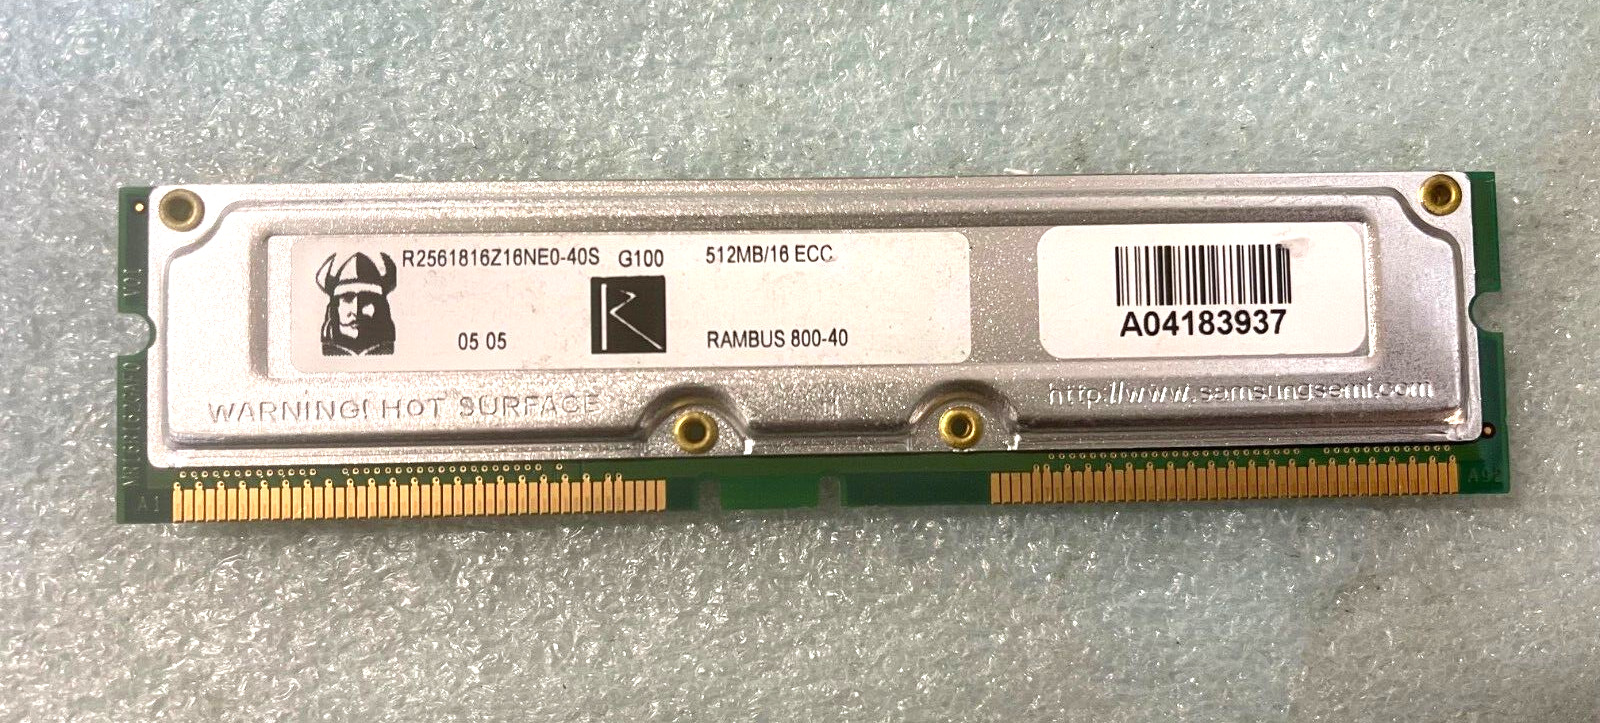 SAMSUNG 512 MB RAMBUS MEMORY MODULE 800-40 R2561816Z16NE0-40S RM2-CMP52-13